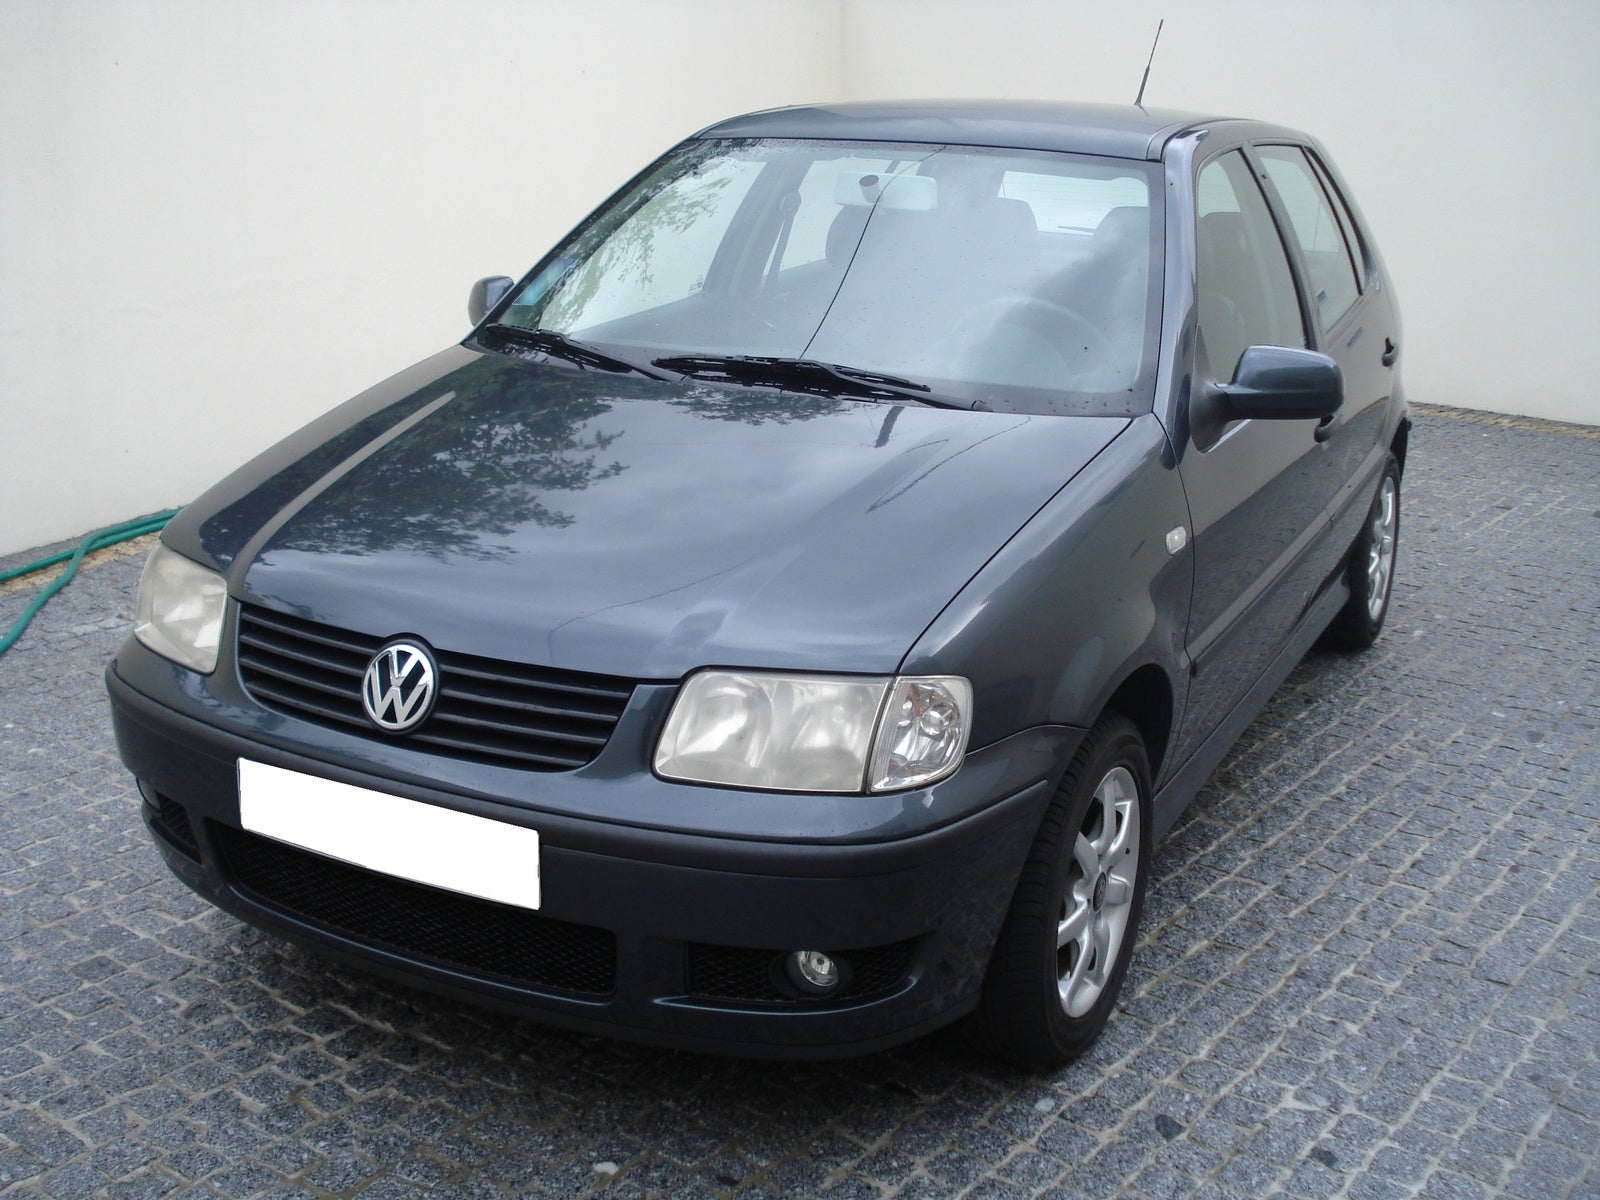 2000 Volkswagen Polo Pictures CarGurus